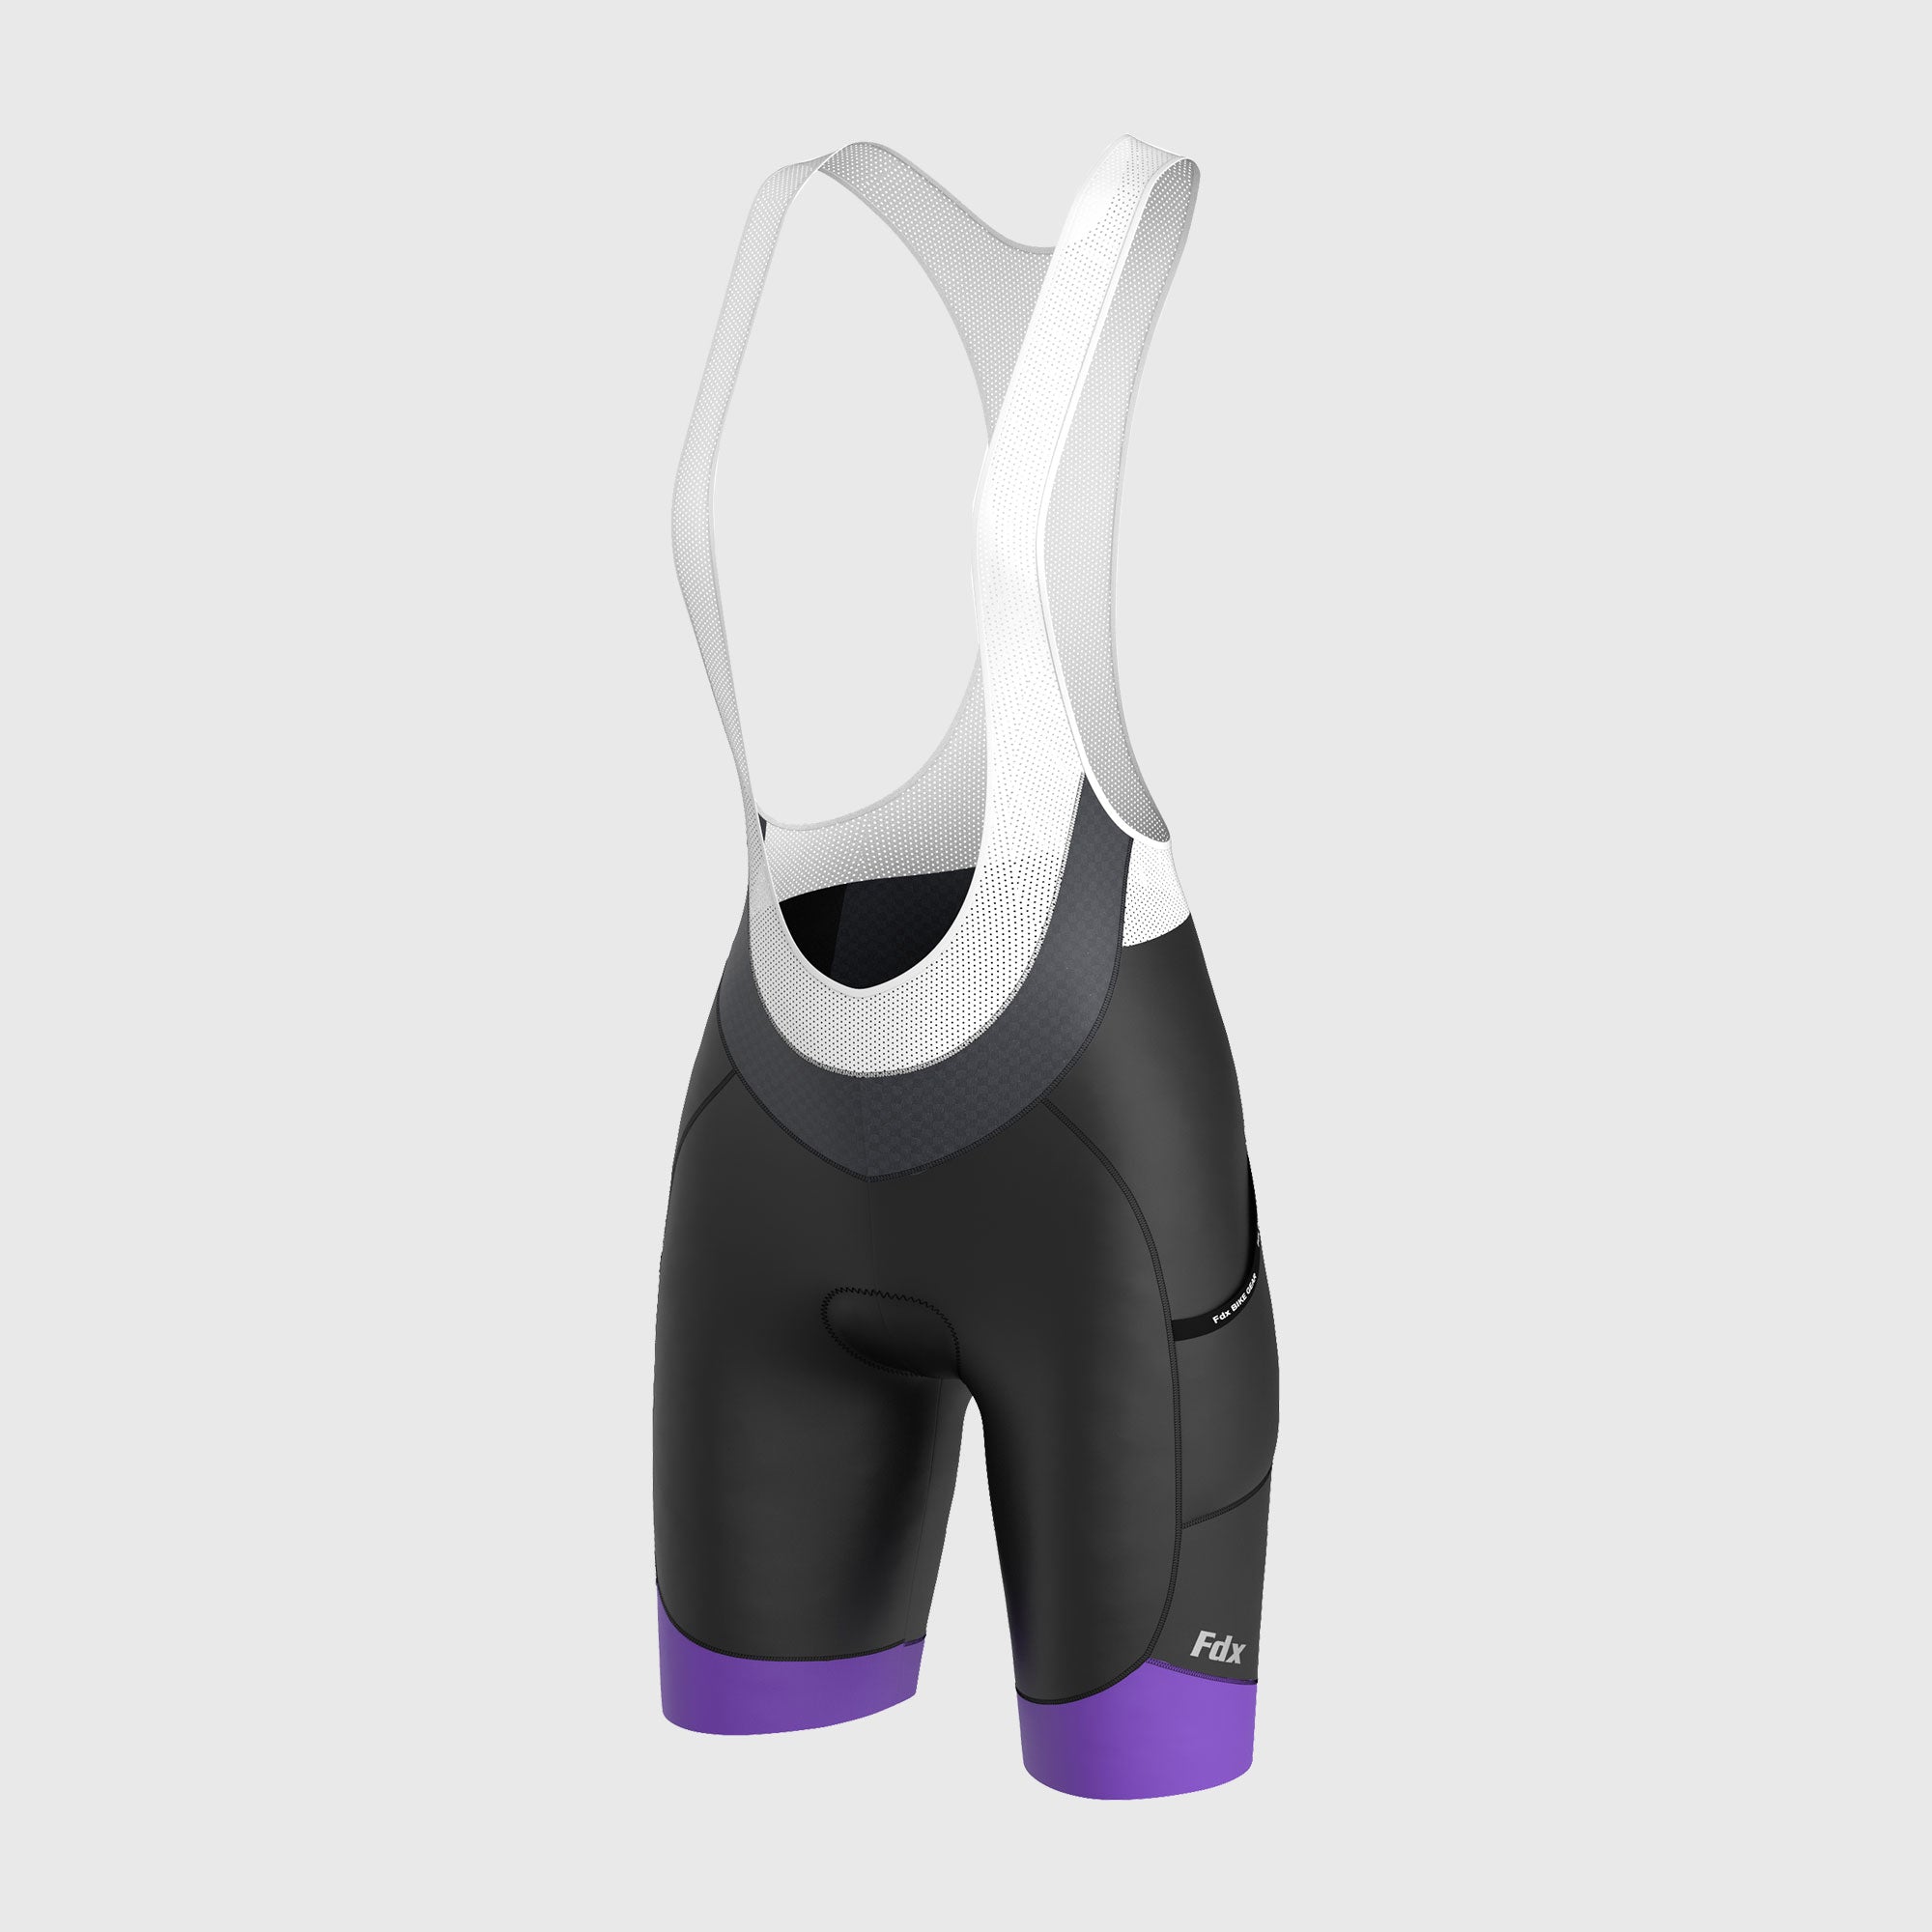 Fdx Women's Black & Purple Cushion Padded Cycling Bib Shorts For Summer Best Outdoor Road Bike Short Length Bib - Essential